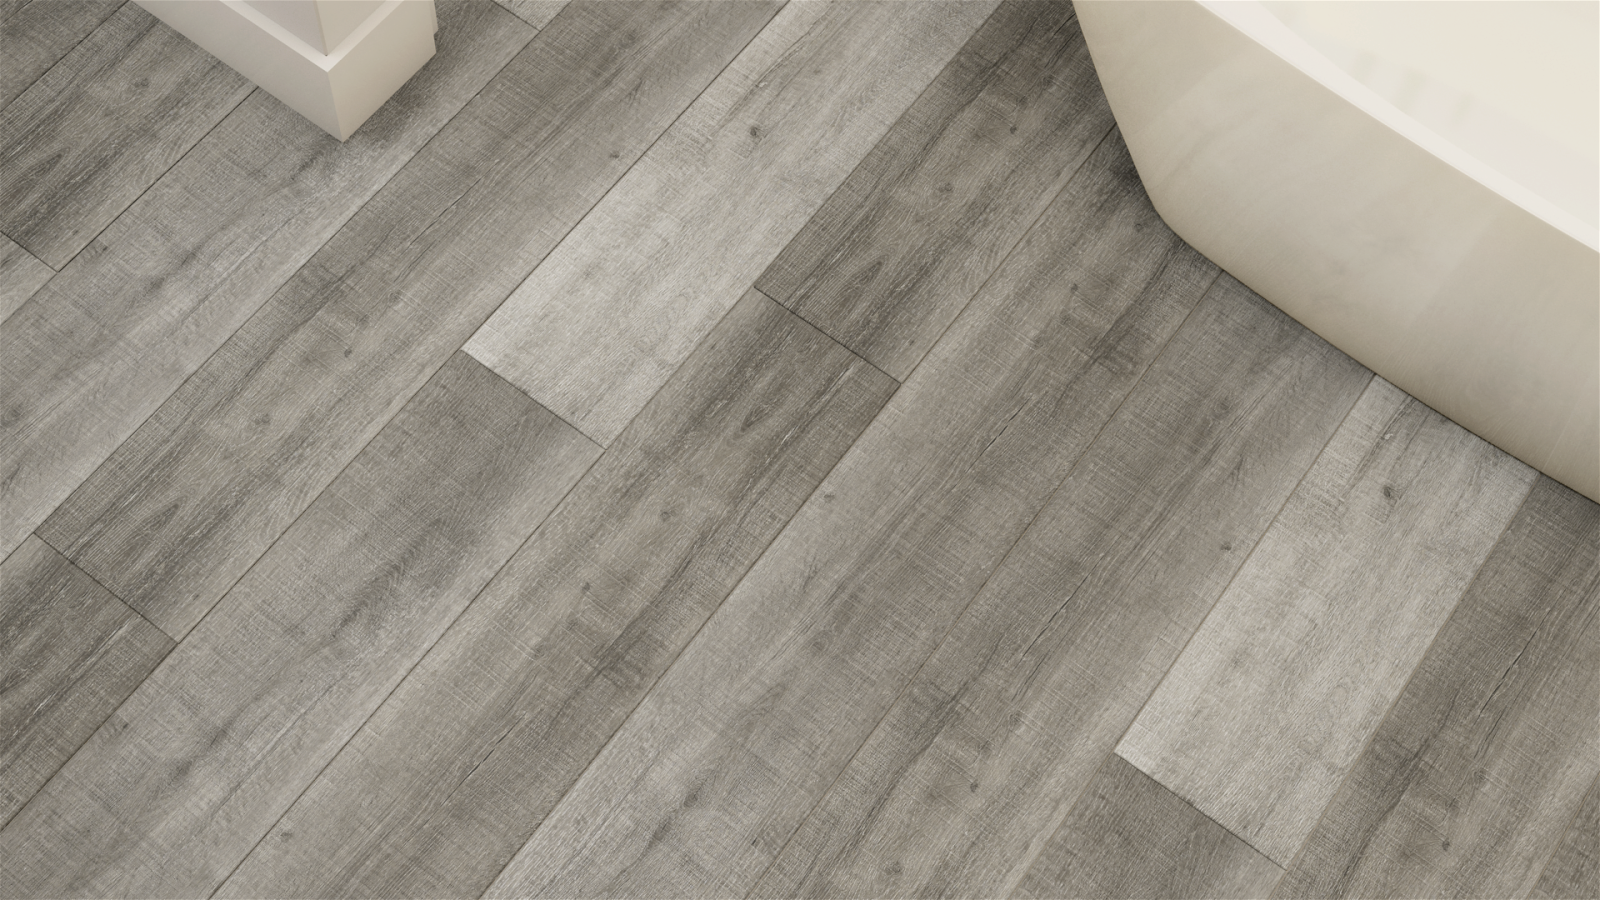 Engineered Floors Triumph® Bella Sera Marrone R003_3109